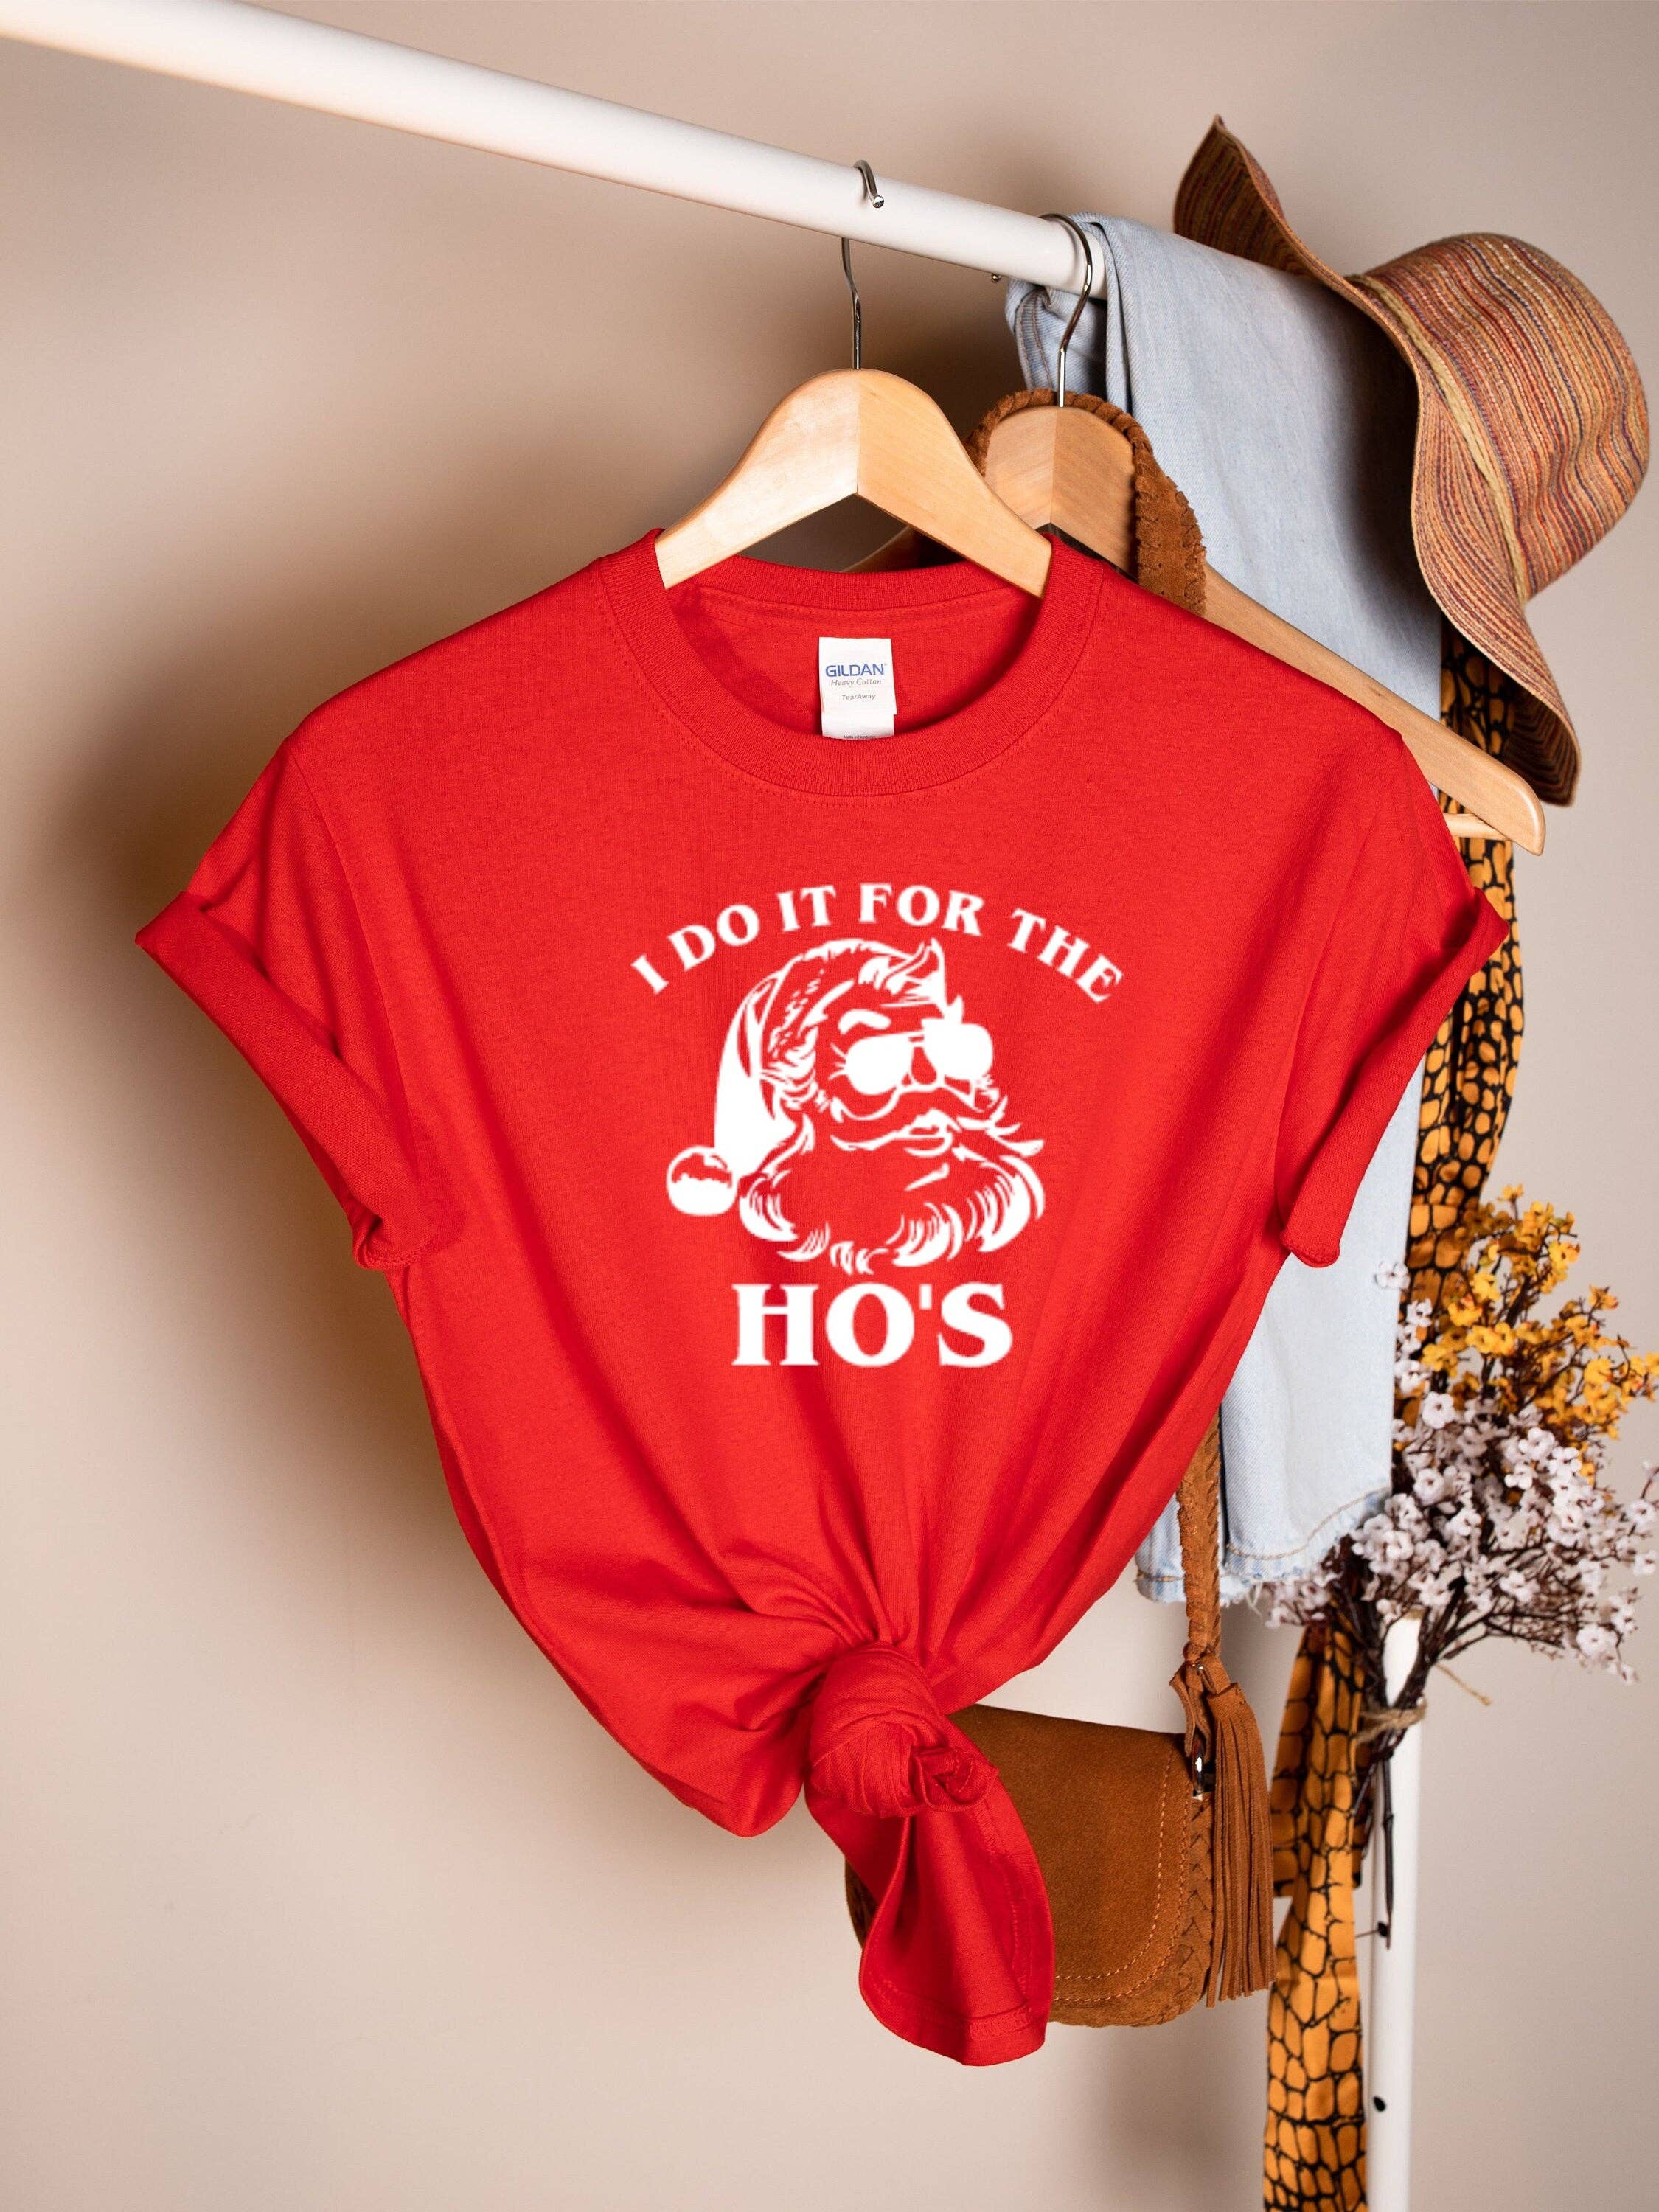 I Do It For The Ho's Shirt, Funny Christmas Santa Shirt, Naughty Santa Shirt